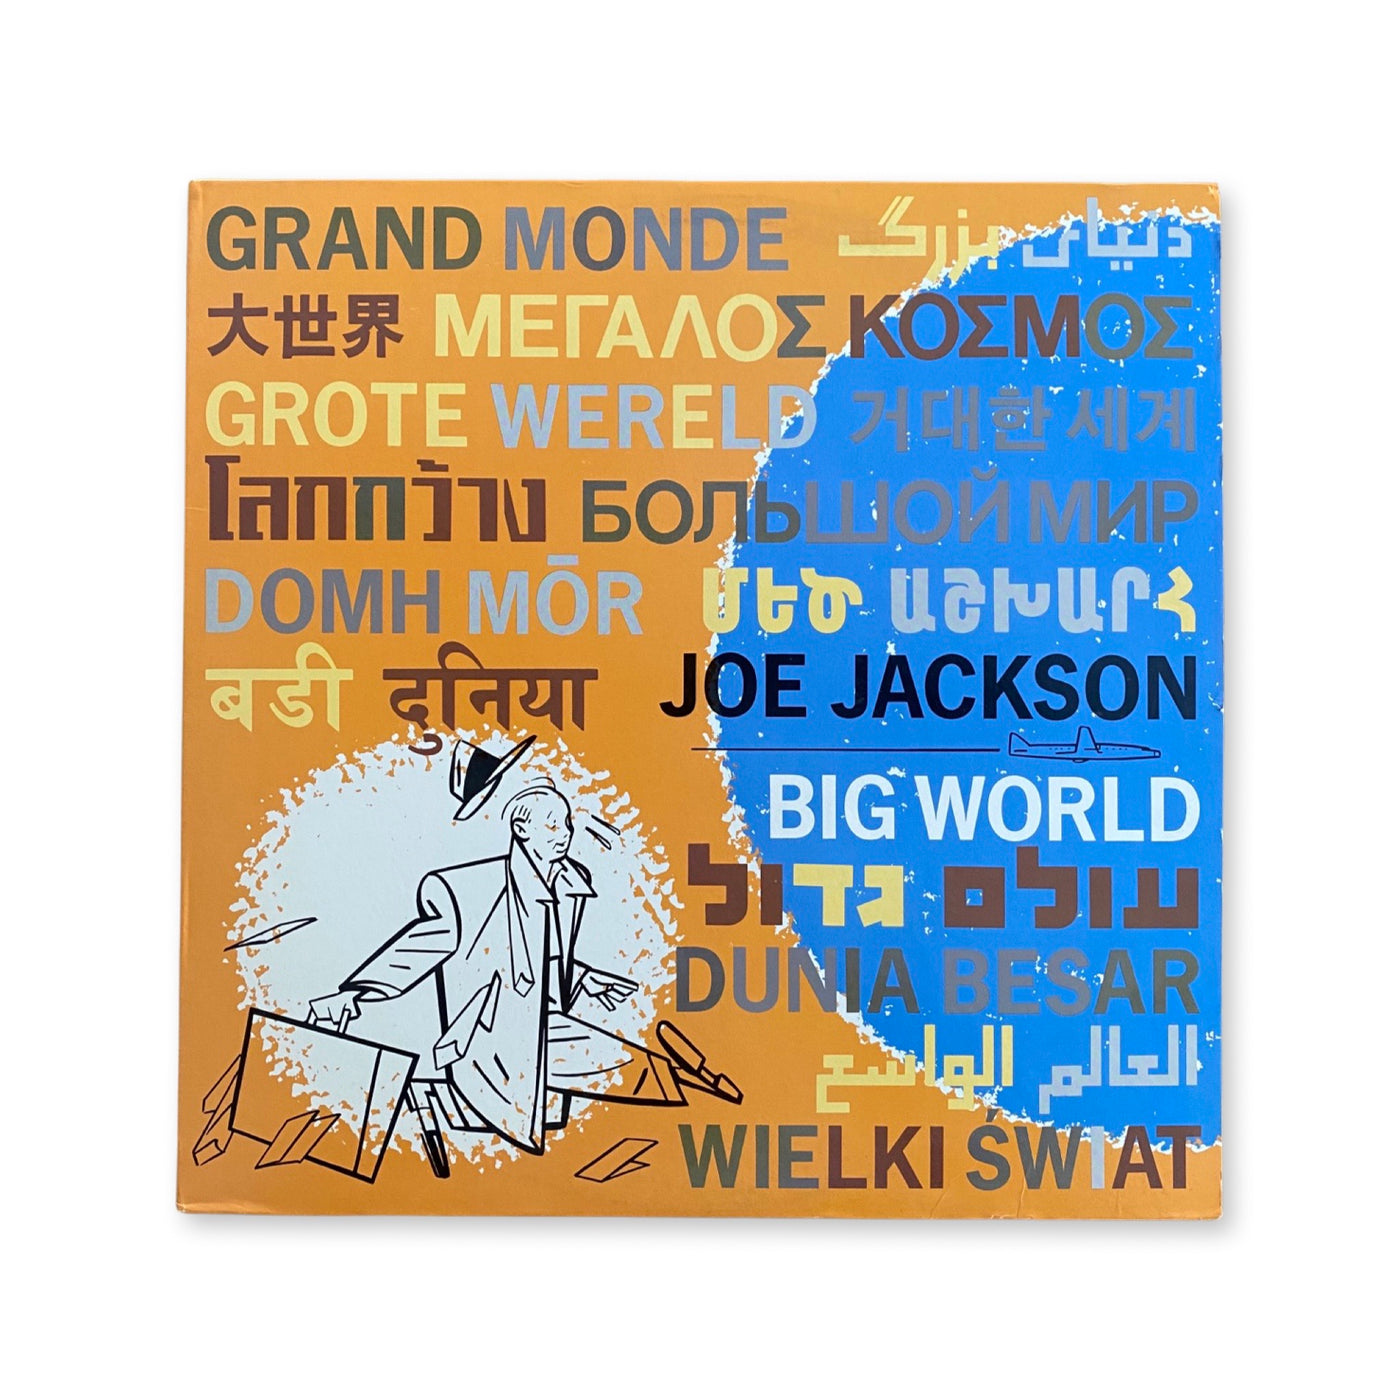 Joe Jackson - Big World